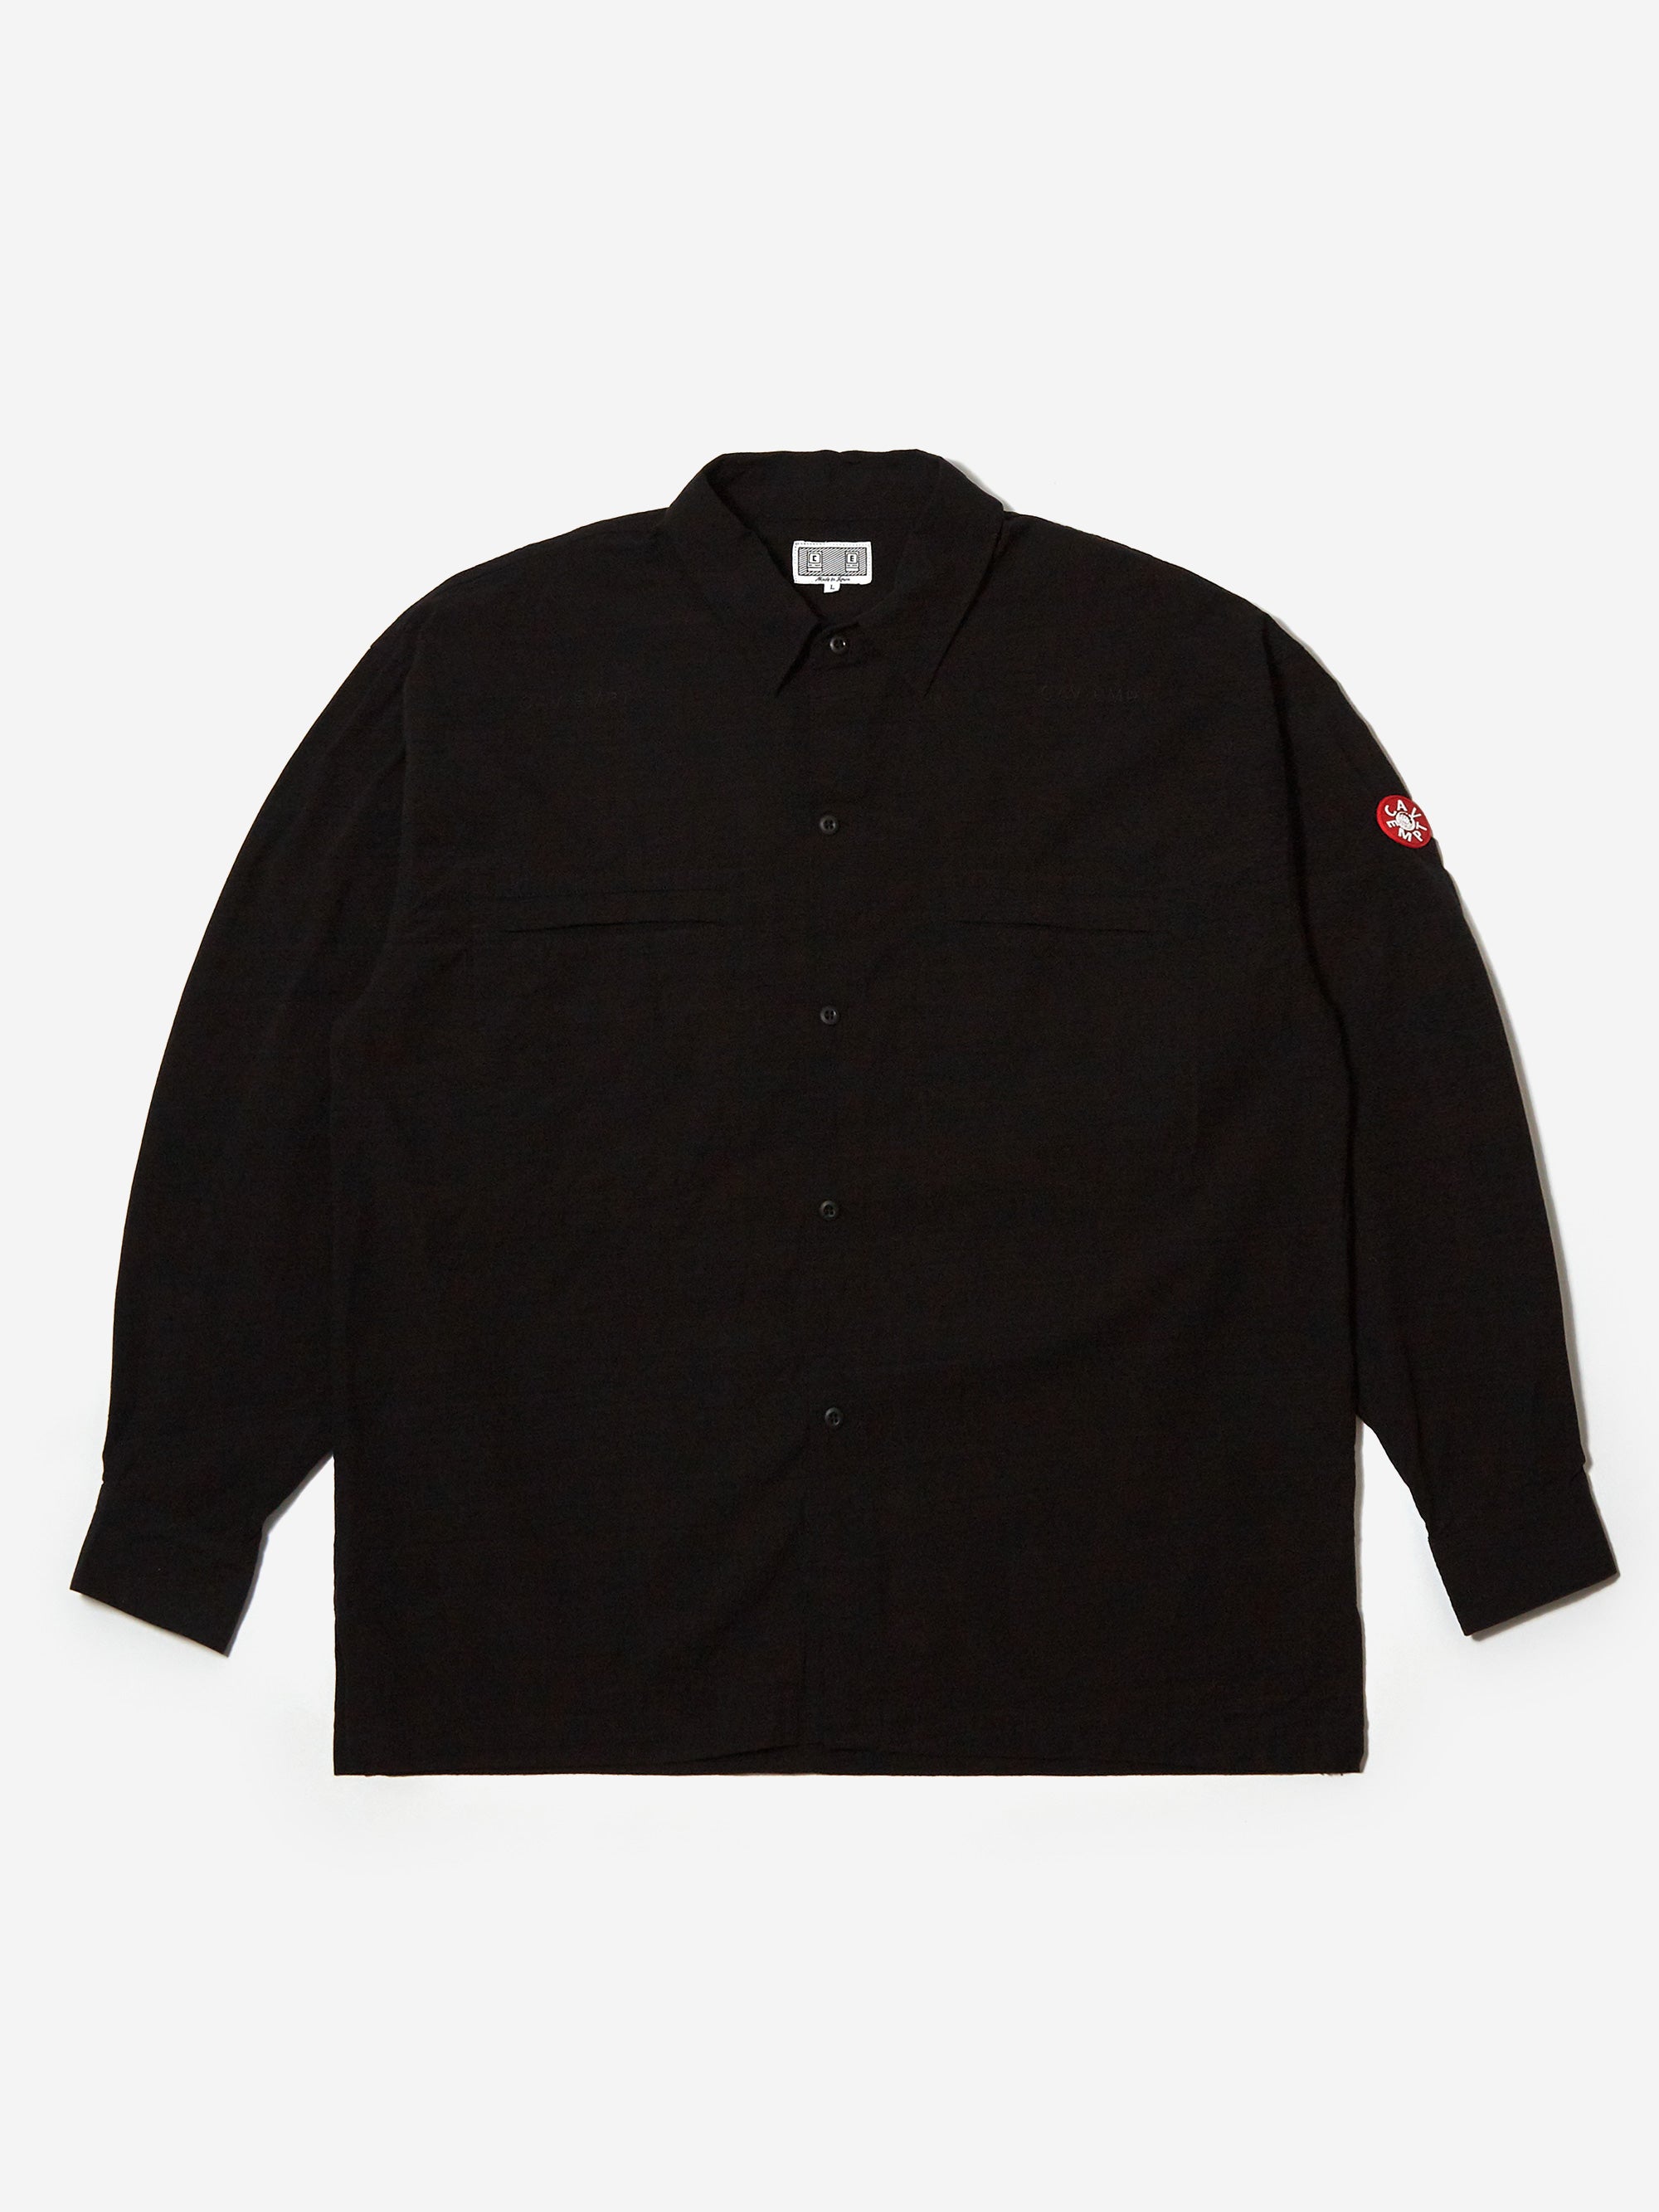 C.E Cav Empt Casual Shirt - Black